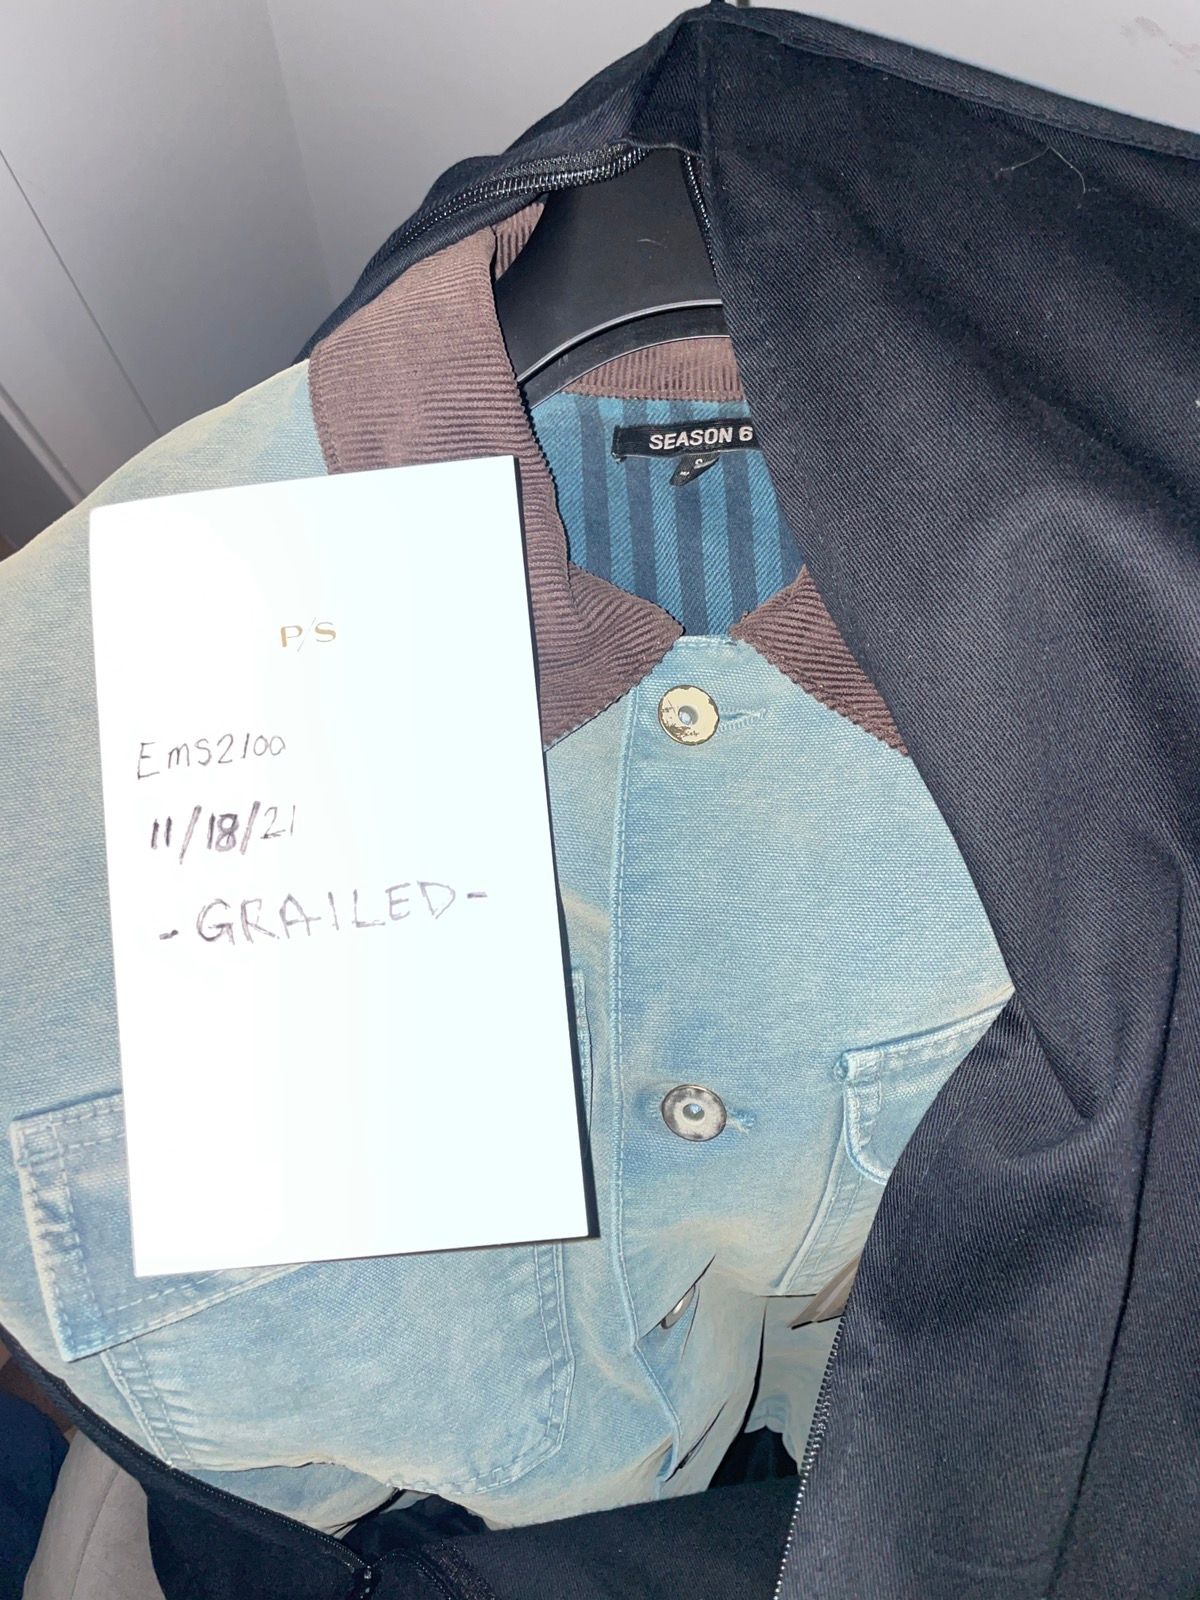 Yeezy Season Yeezy Season 6 Flannel Lined Denim Jacket Glacier Size US S / EU 44-46 / 1 - 6 Preview